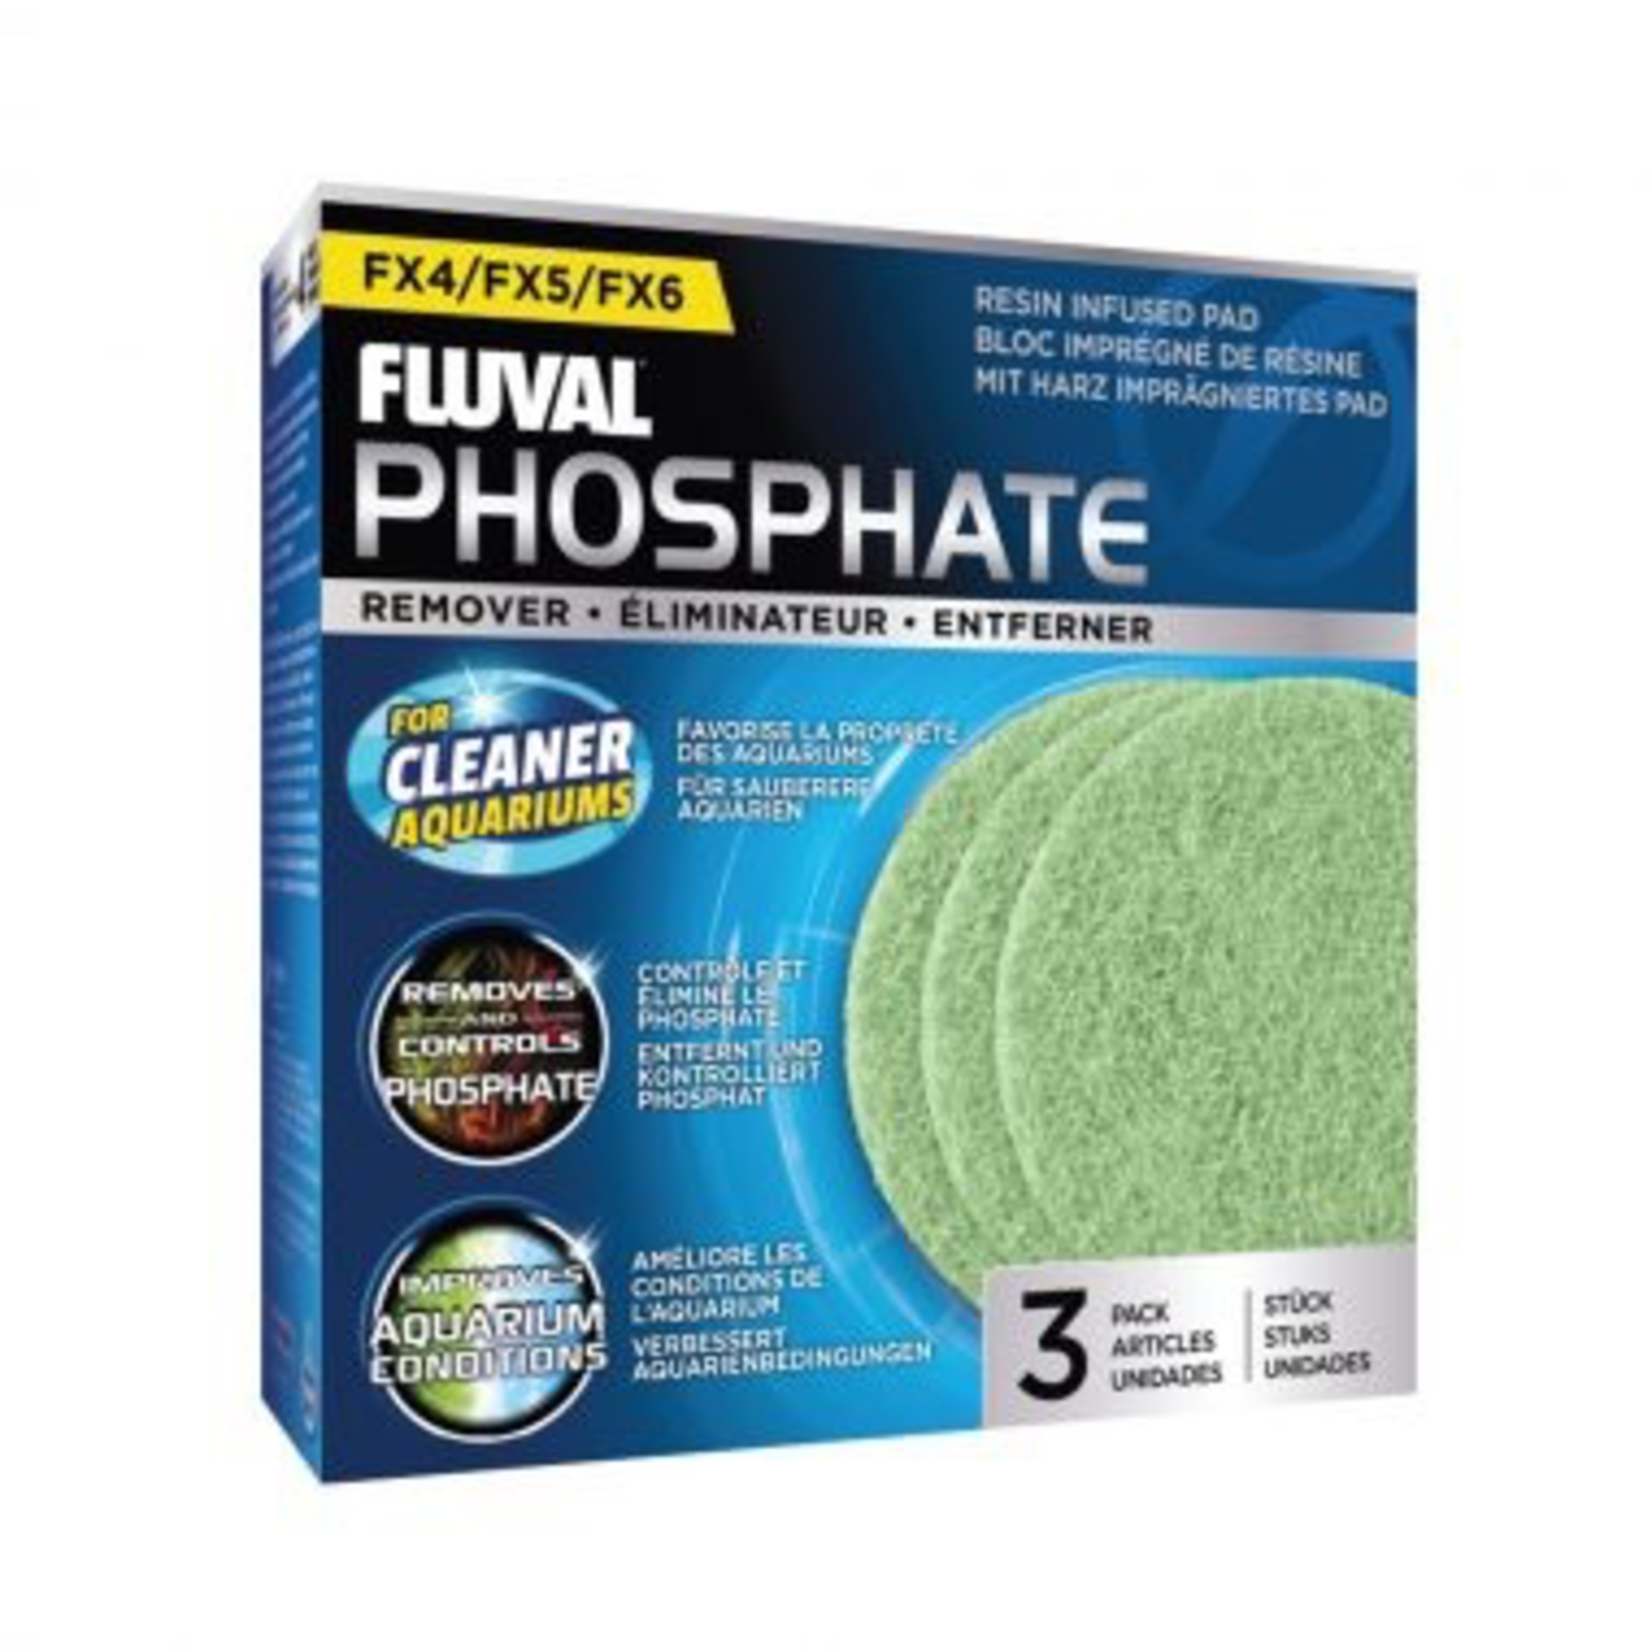 FLUVAL (W) FL FX4/FX5/FX6 Phosphate Remover Pad, 3pcs